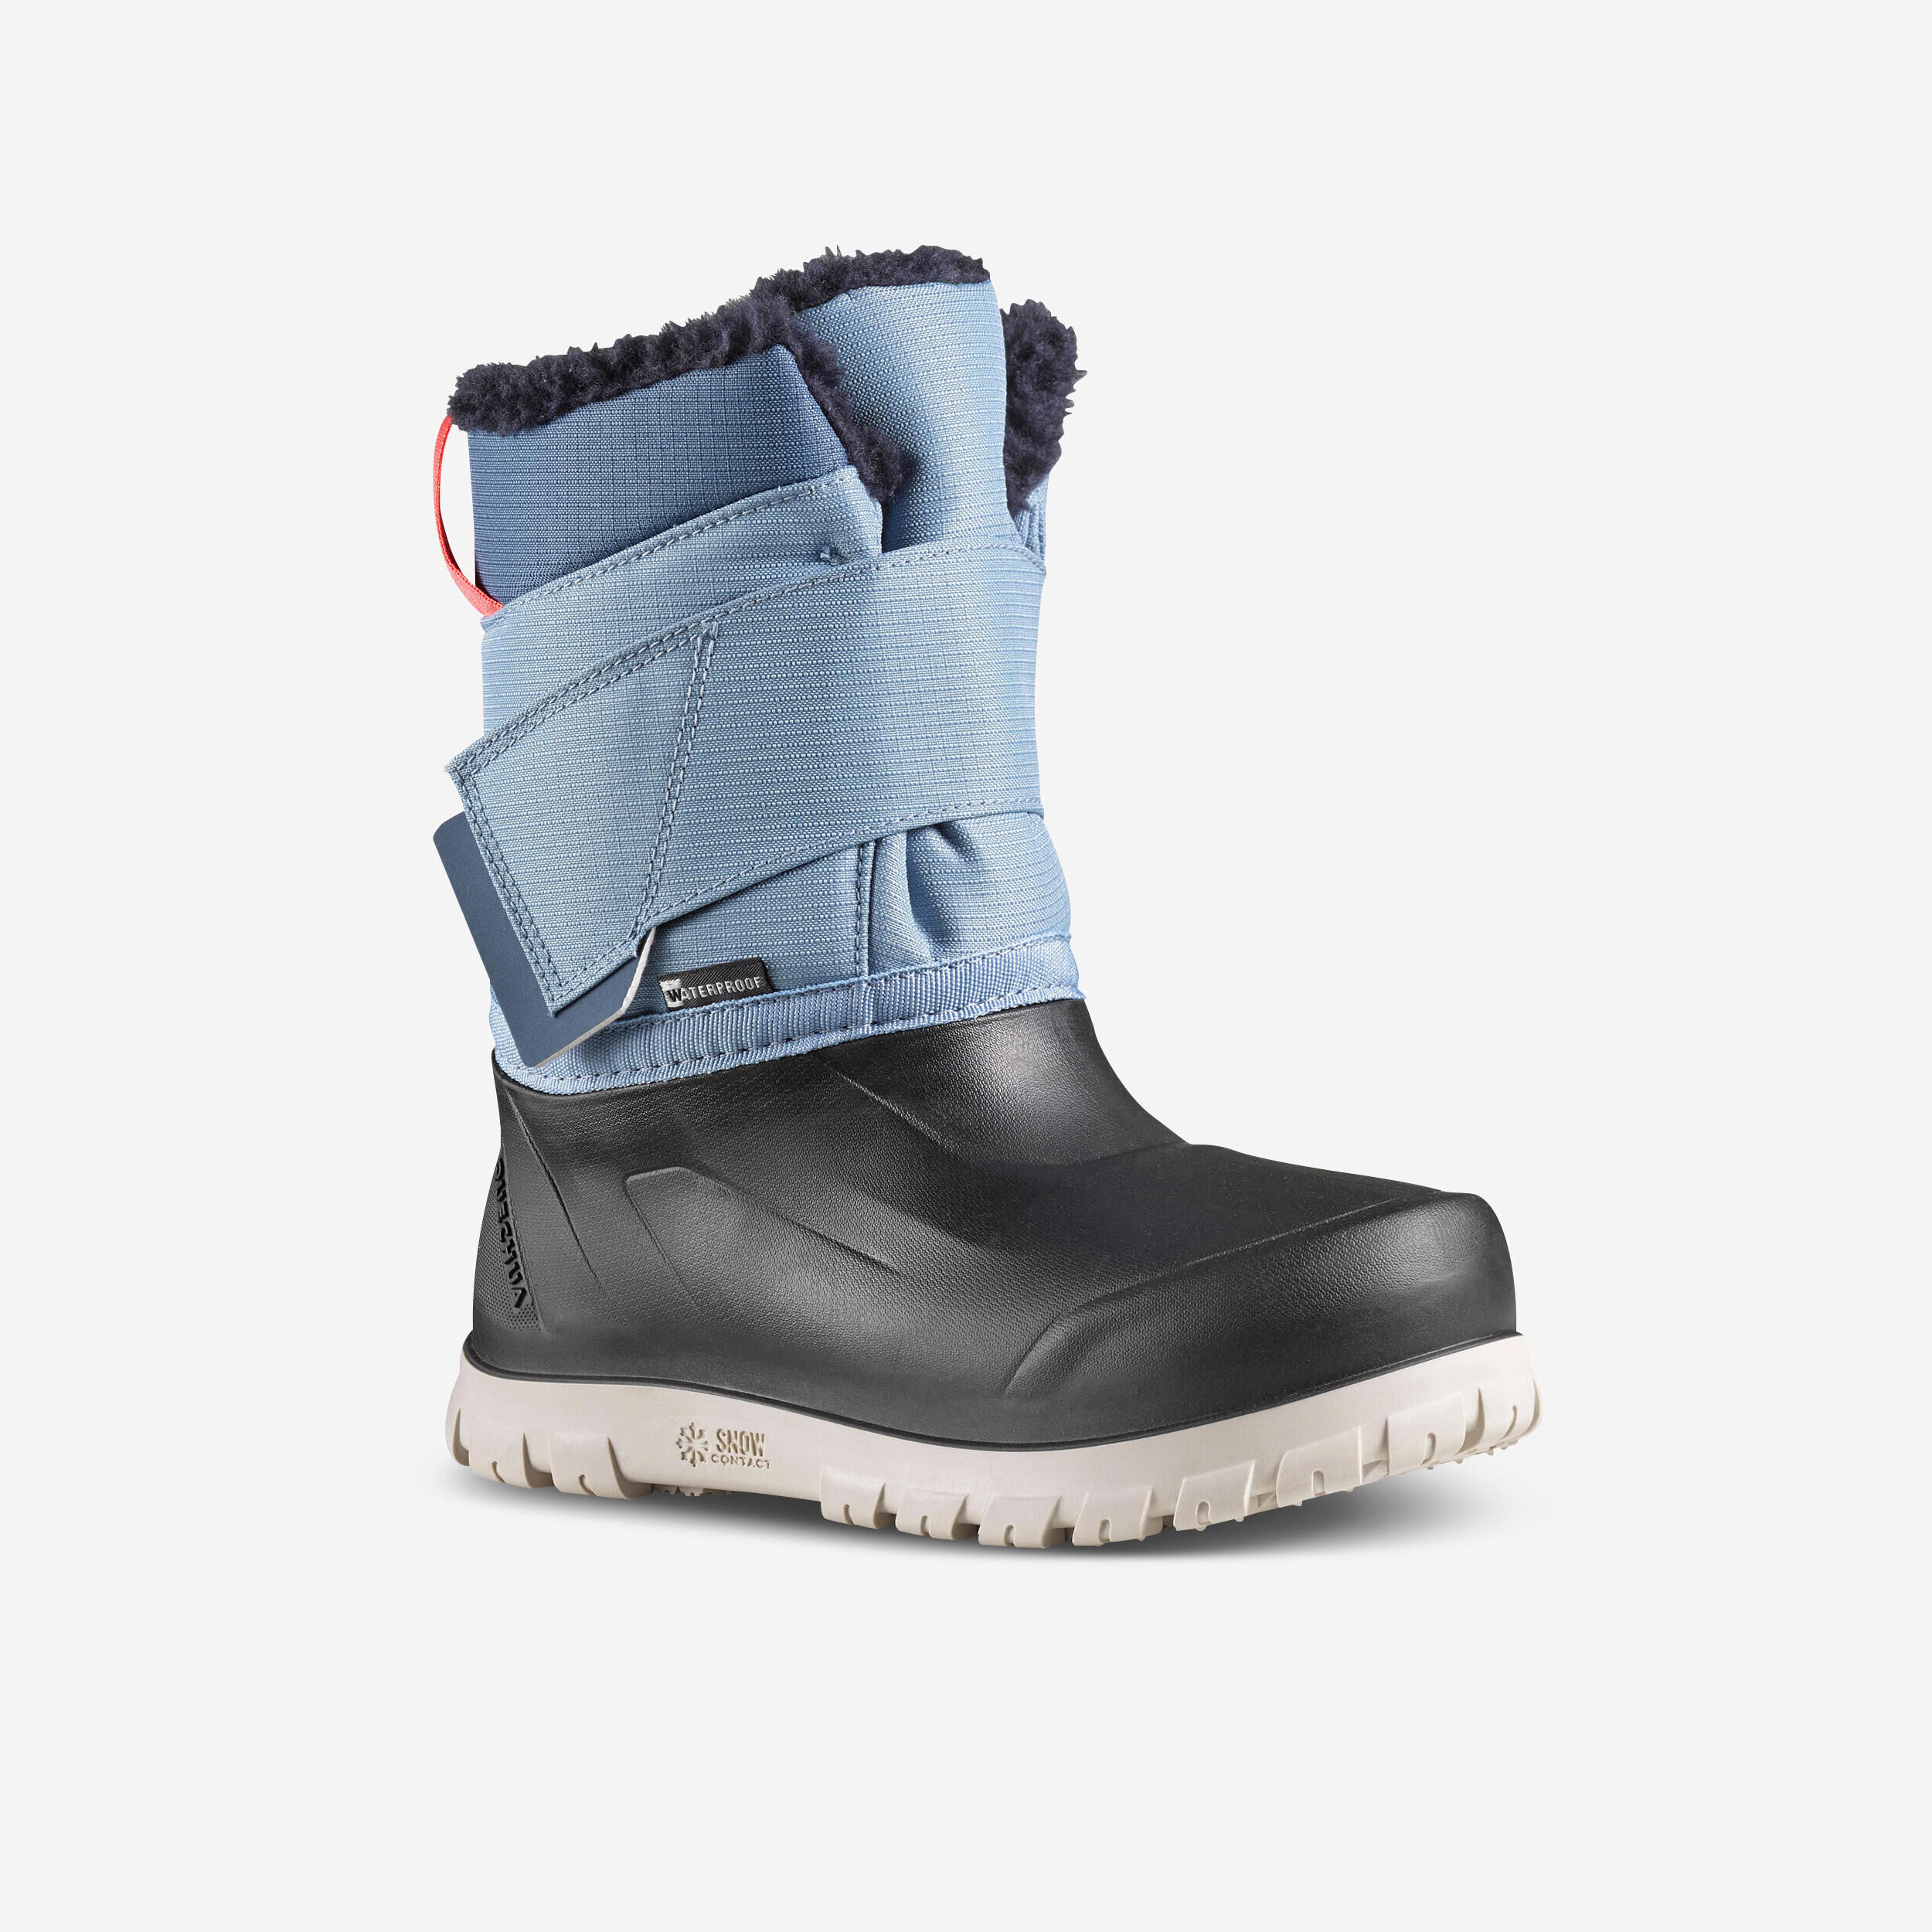 QUECHUA Kids’ warm waterproof snow hiking boots SH500 - Velcro Size 7 - 5.5